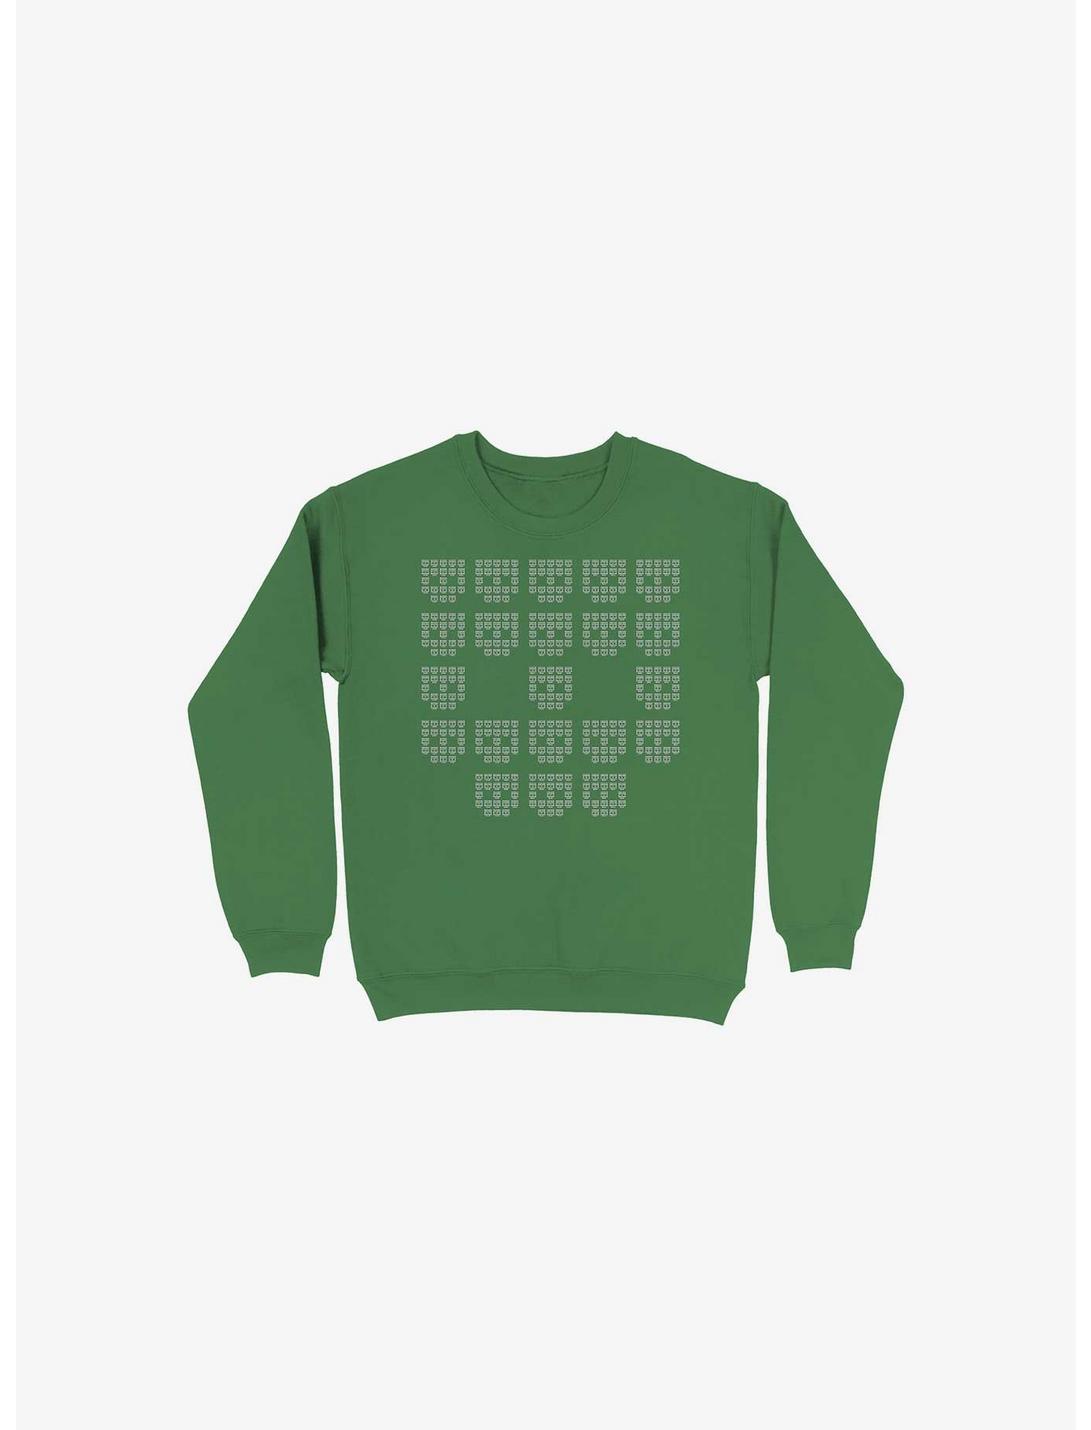 9724 Skulls Sweatshirt, KELLY GREEN, hi-res